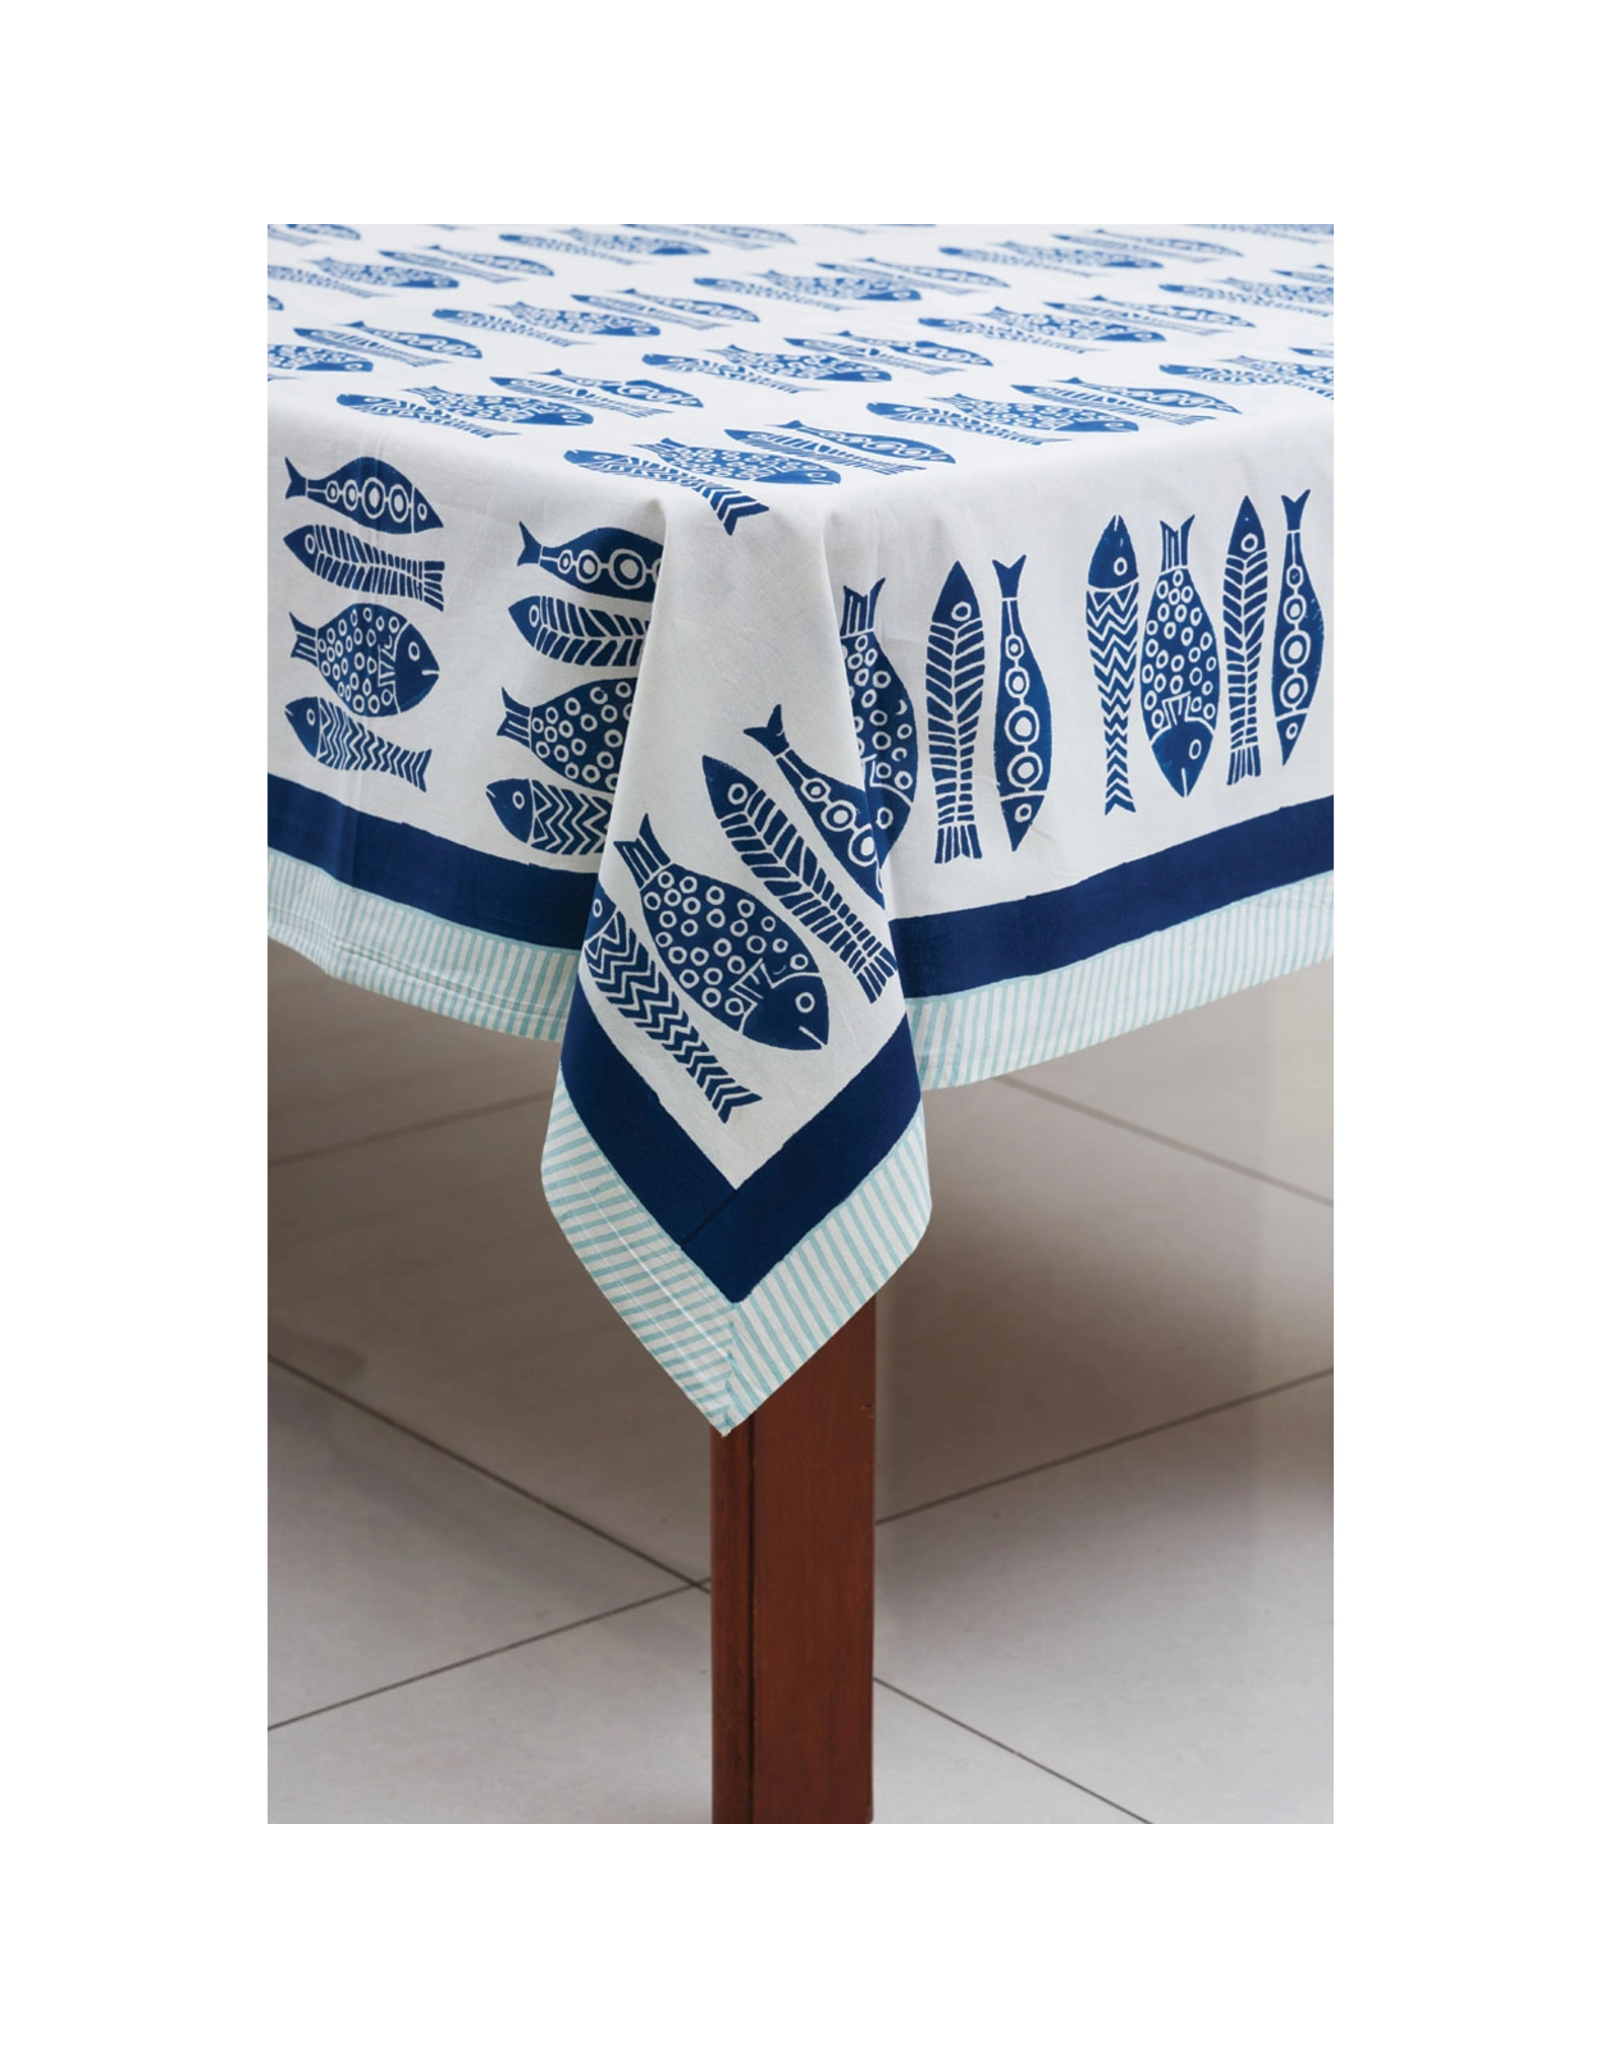 Trade roots Fish Tablecloth, 60 x 90, India